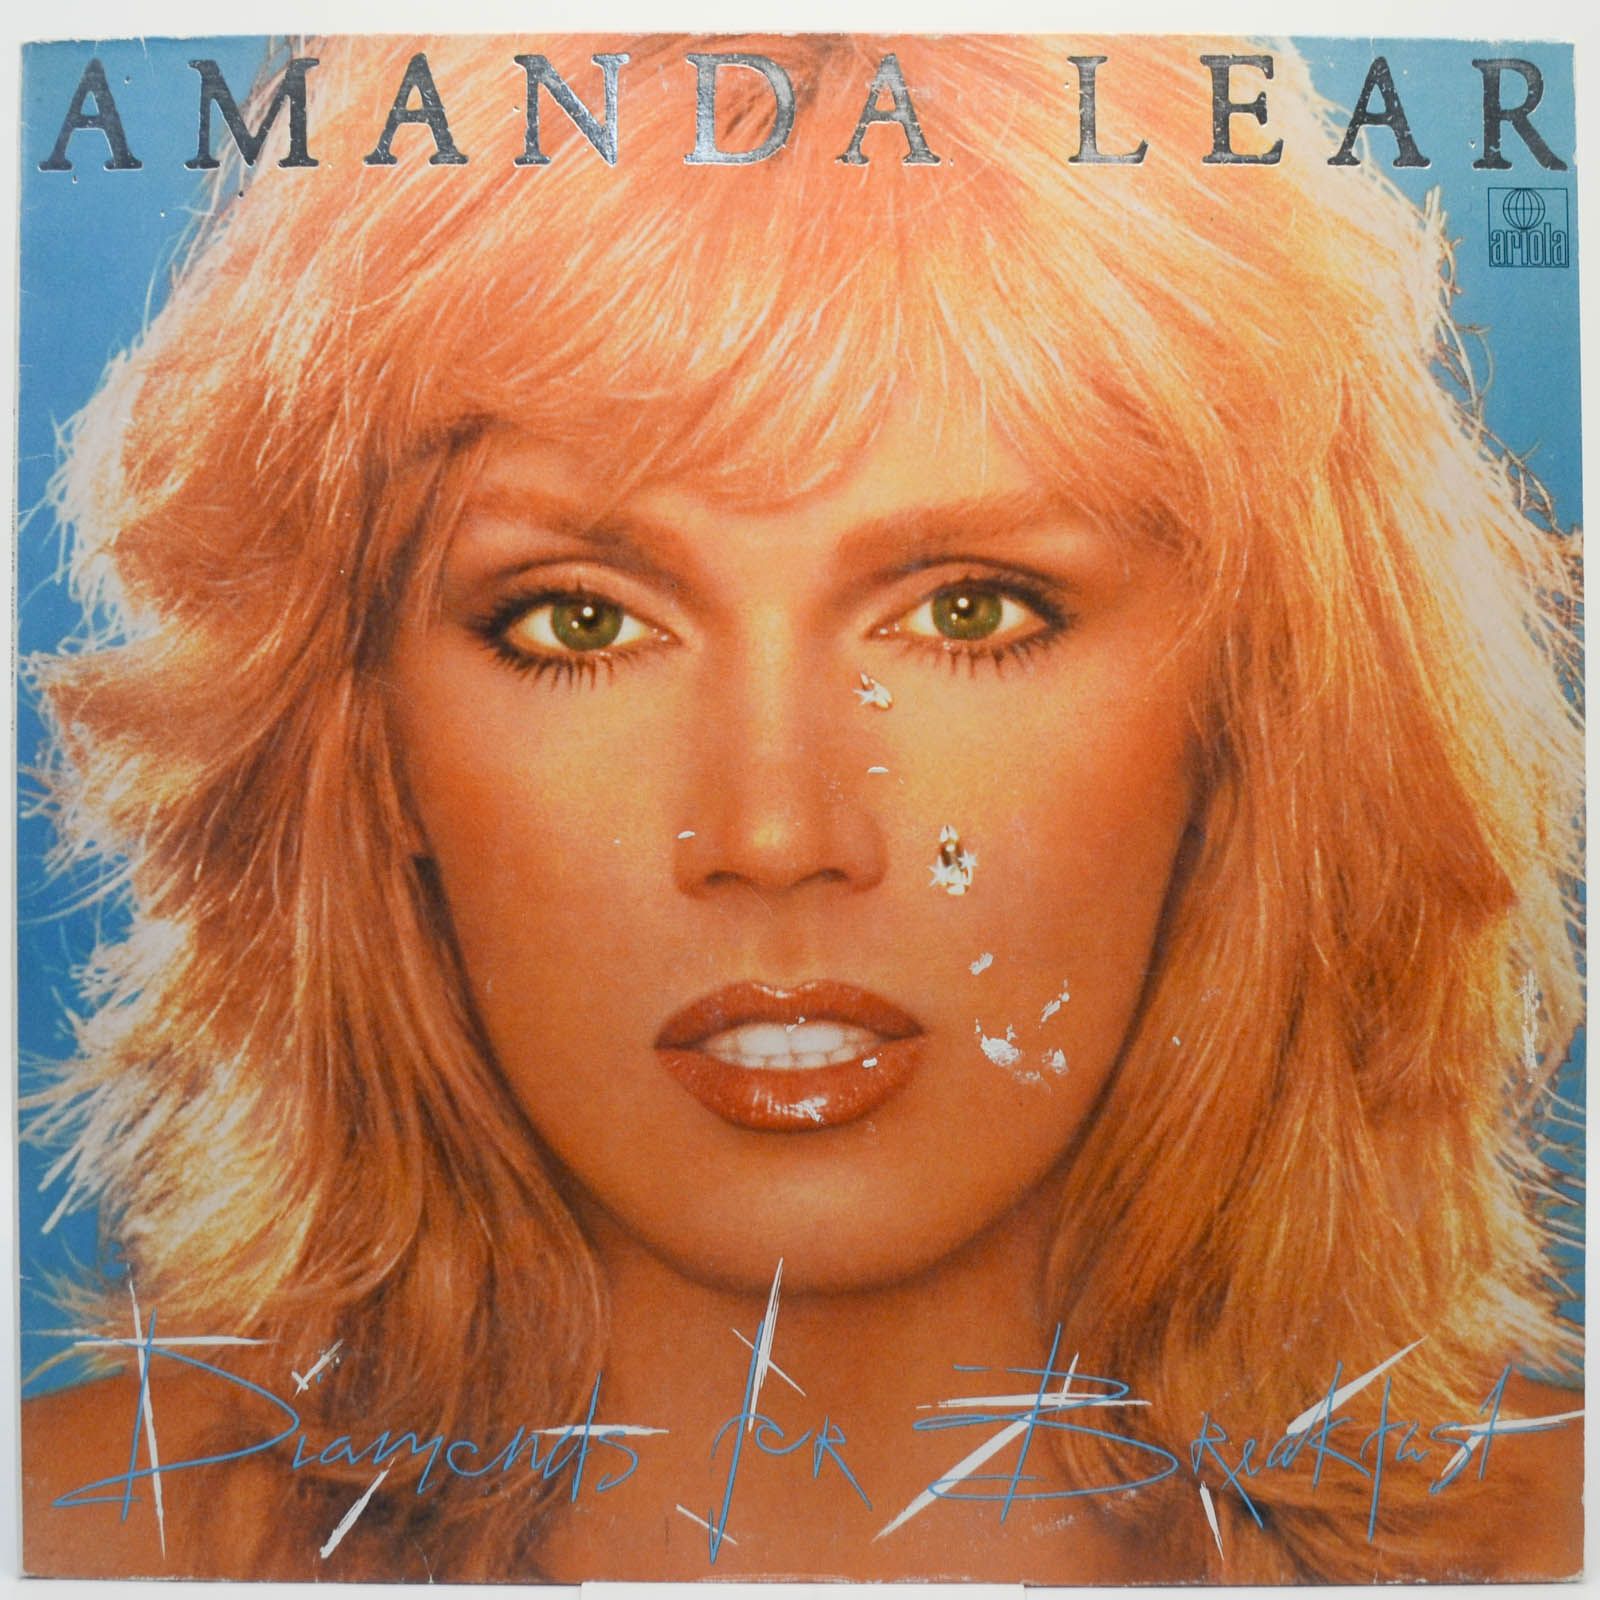 Amanda Lear — Diamonds For Breakfast, 1980